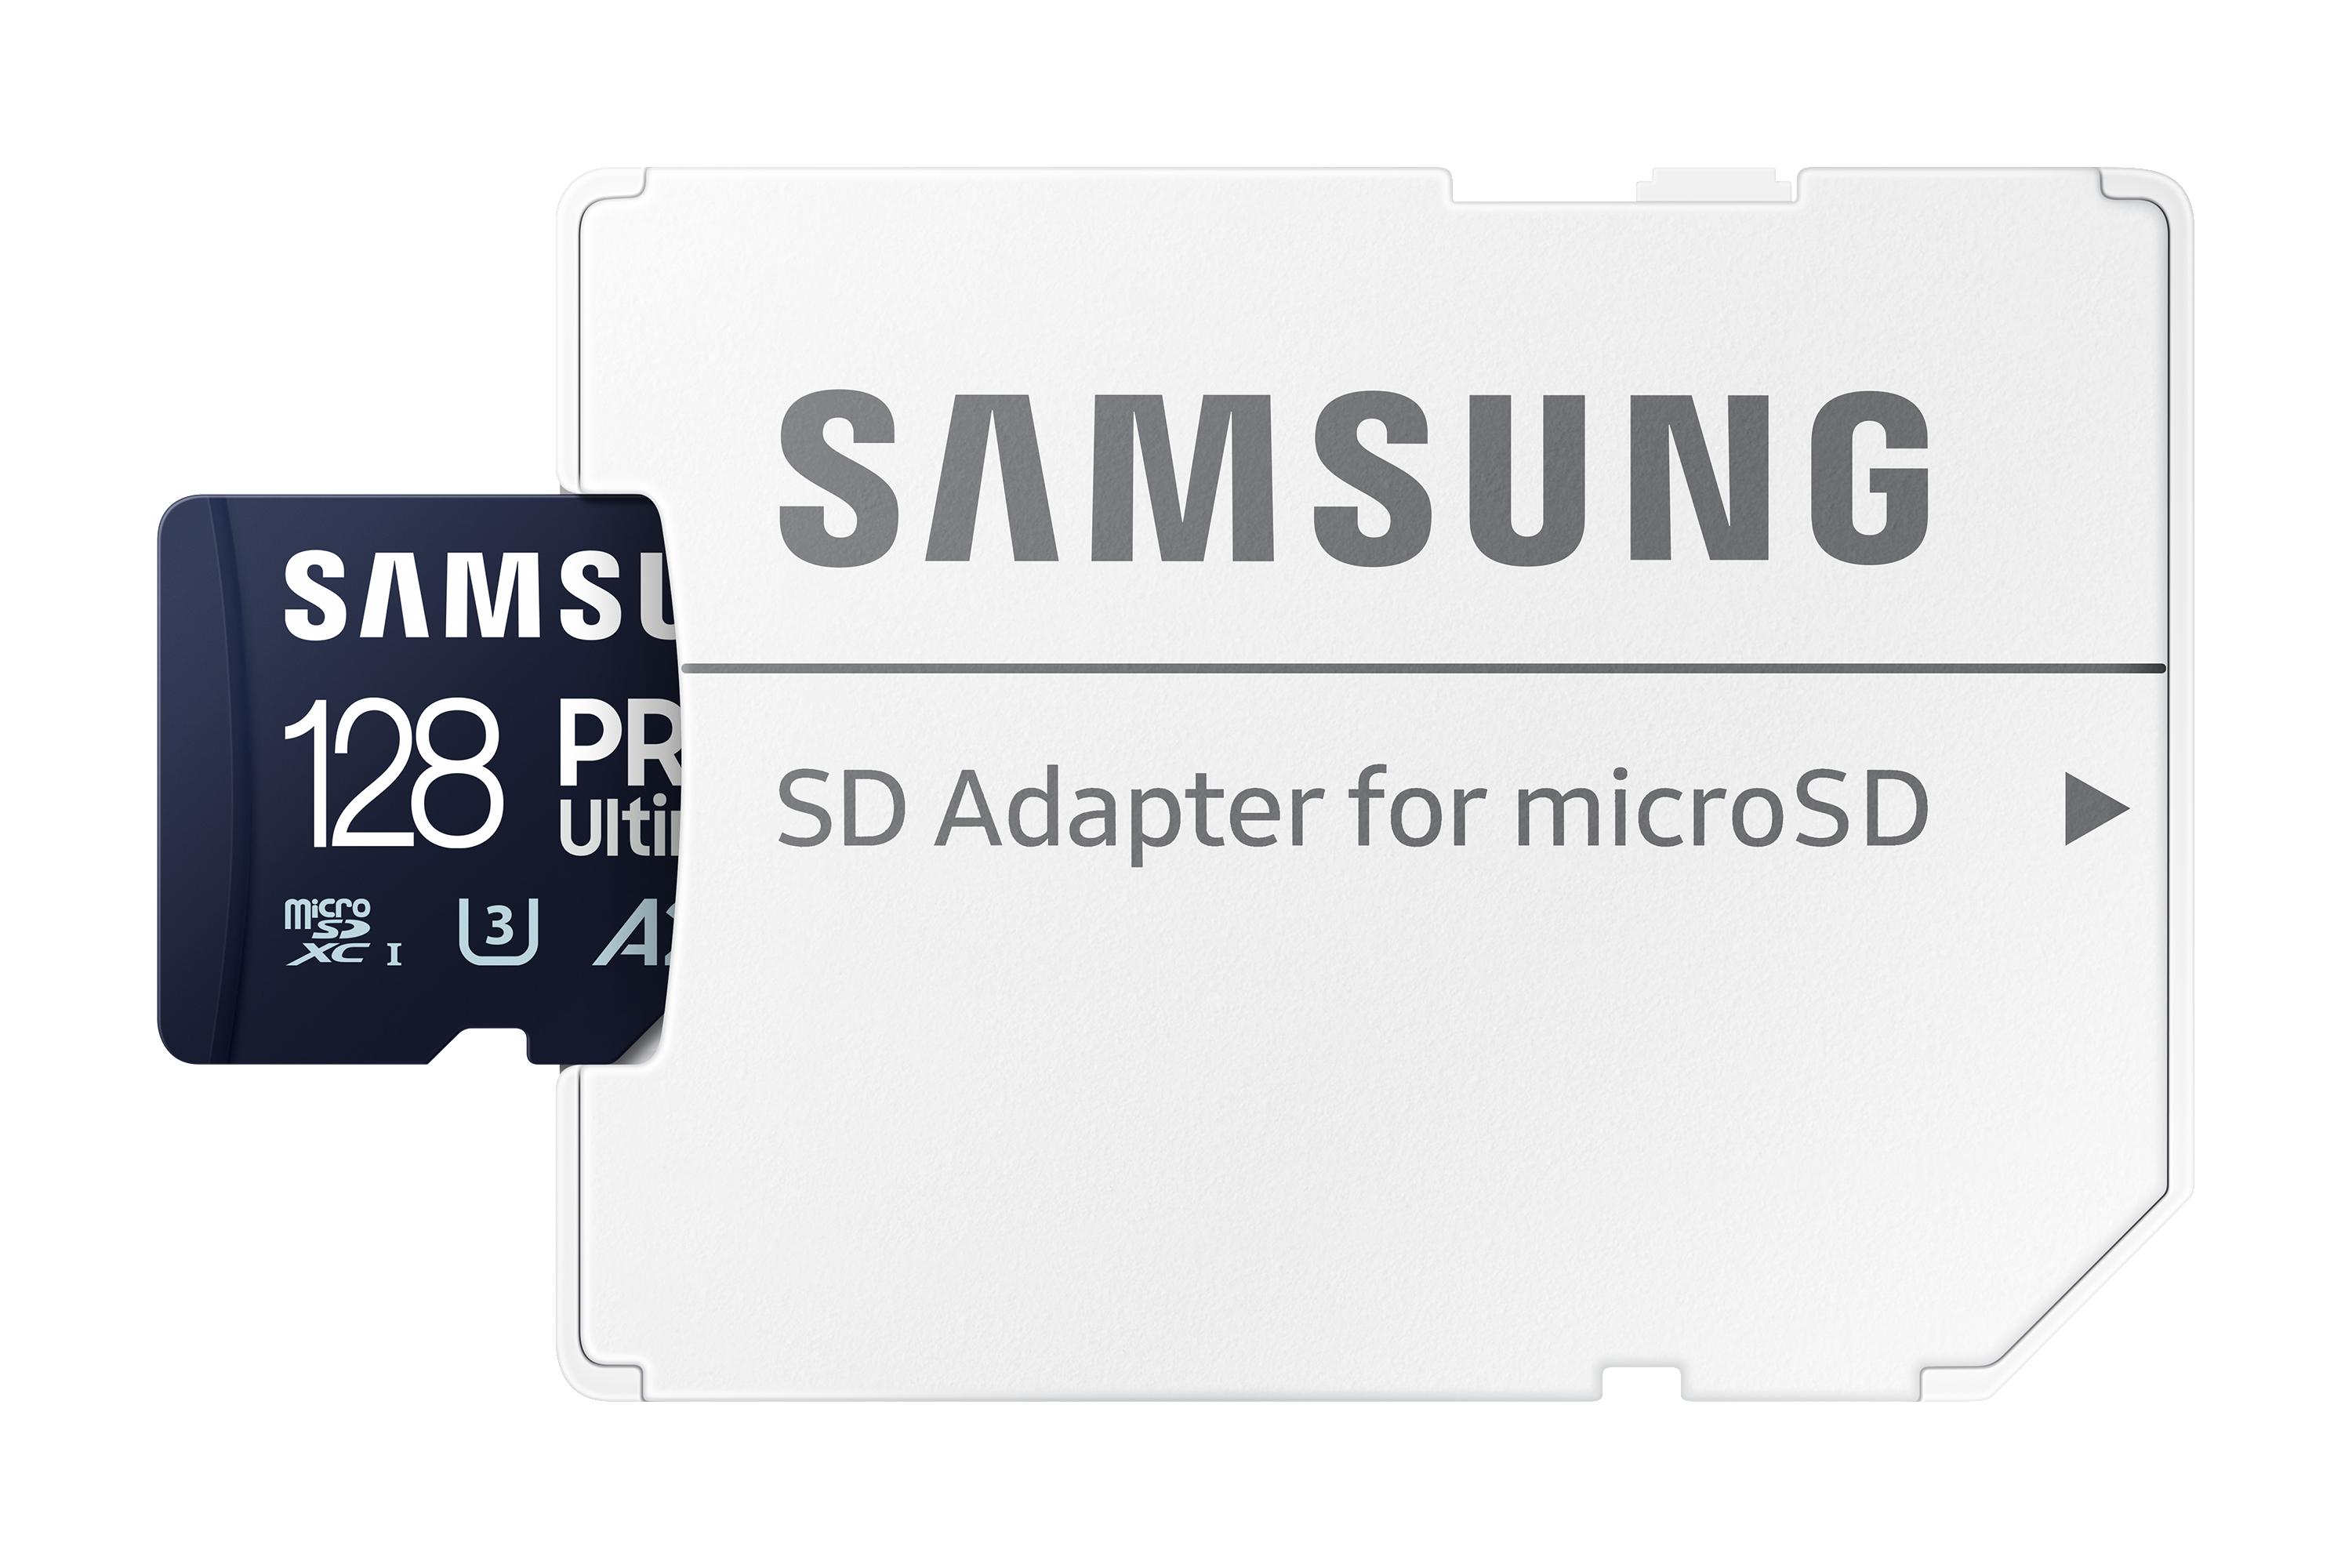 SAMSUNG PRO Ultimate, 128 Micro-SD MB/s 200 GB, Speicherkarte